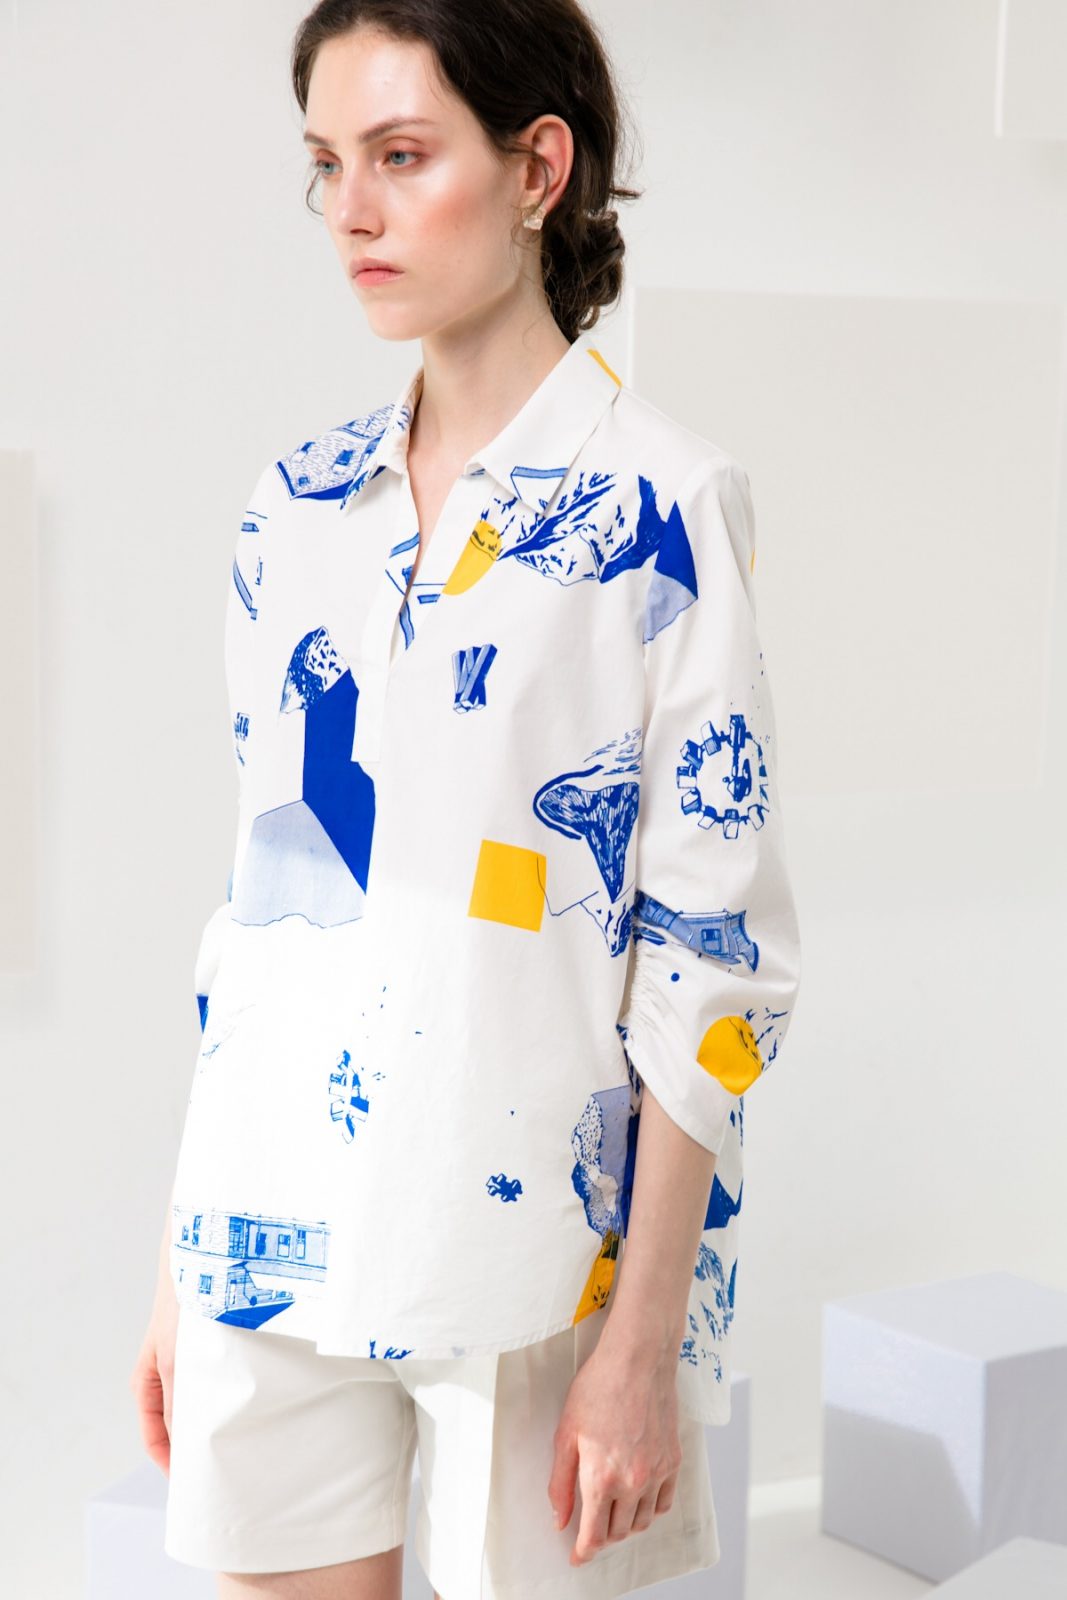 SKYE modern minimalist women clothing fashion Murphy 3:4 sleeve shirt interstellar 5